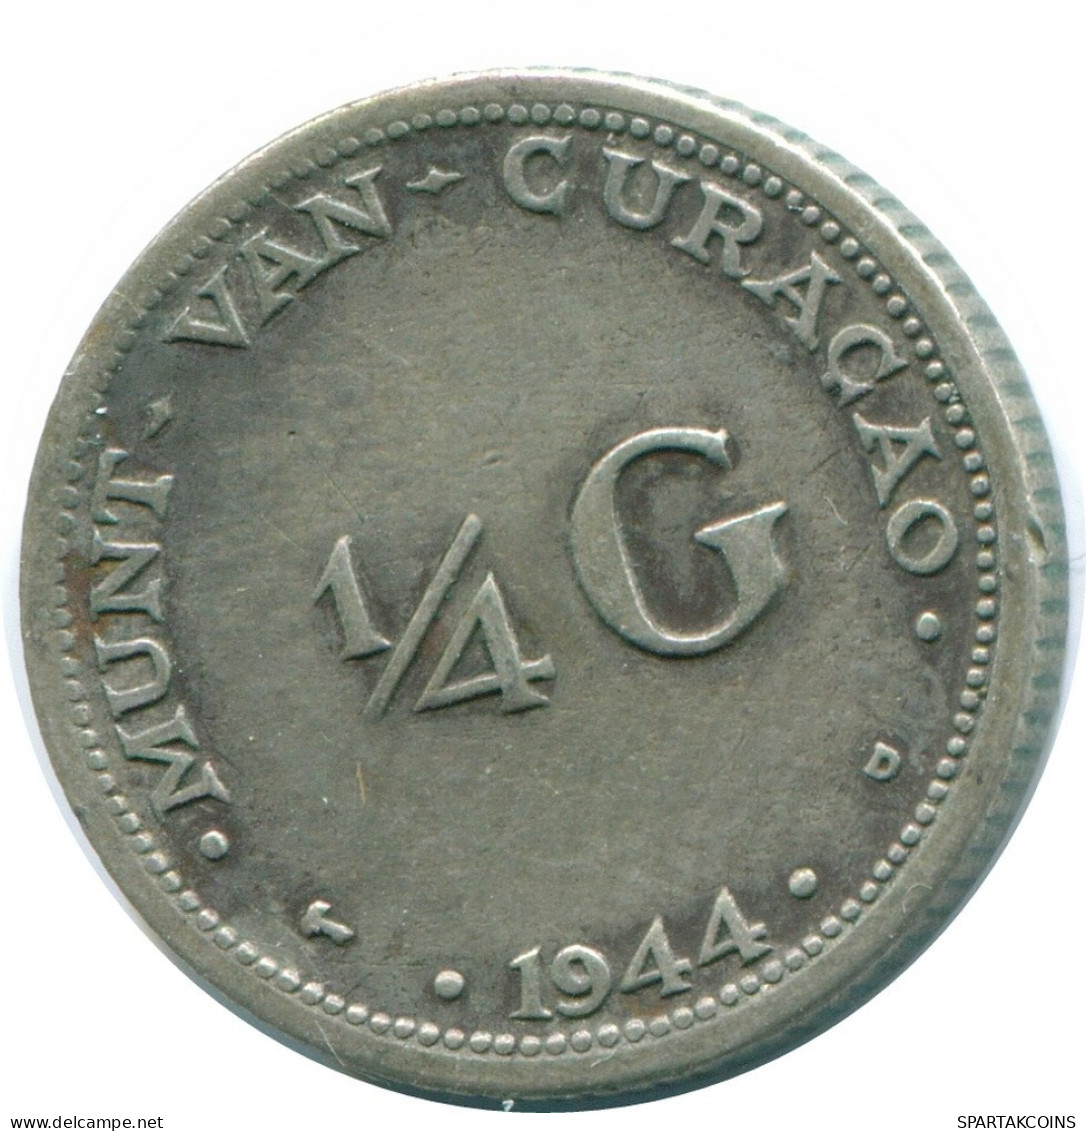 1/4 GULDEN 1944 CURACAO Netherlands SILVER Colonial Coin #NL10603.4.U.A